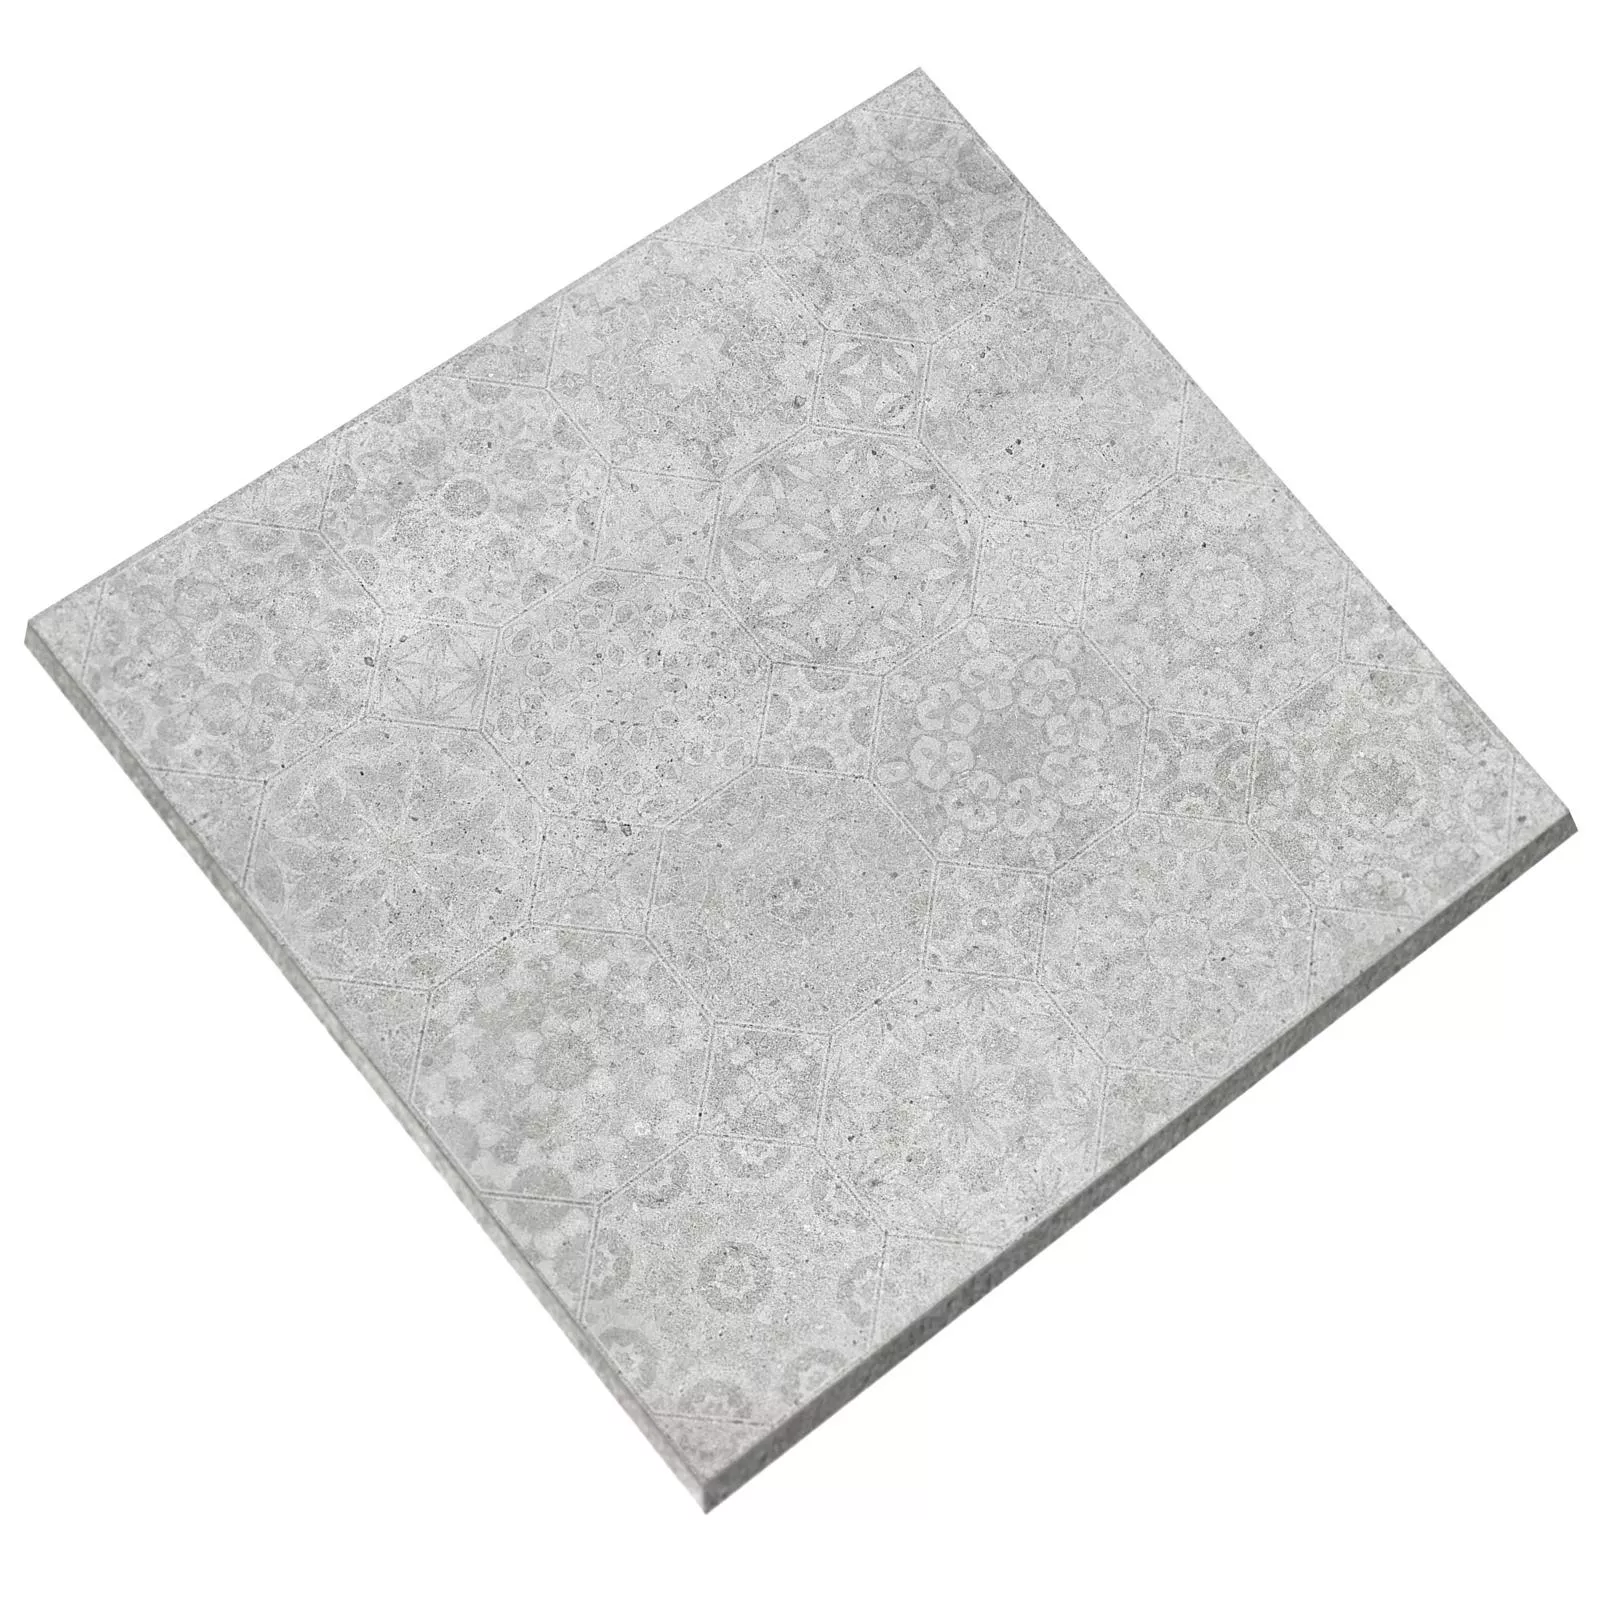 Floor Tiles Freeland Stone Optic R10/B Light Grey 60x60cm Decor